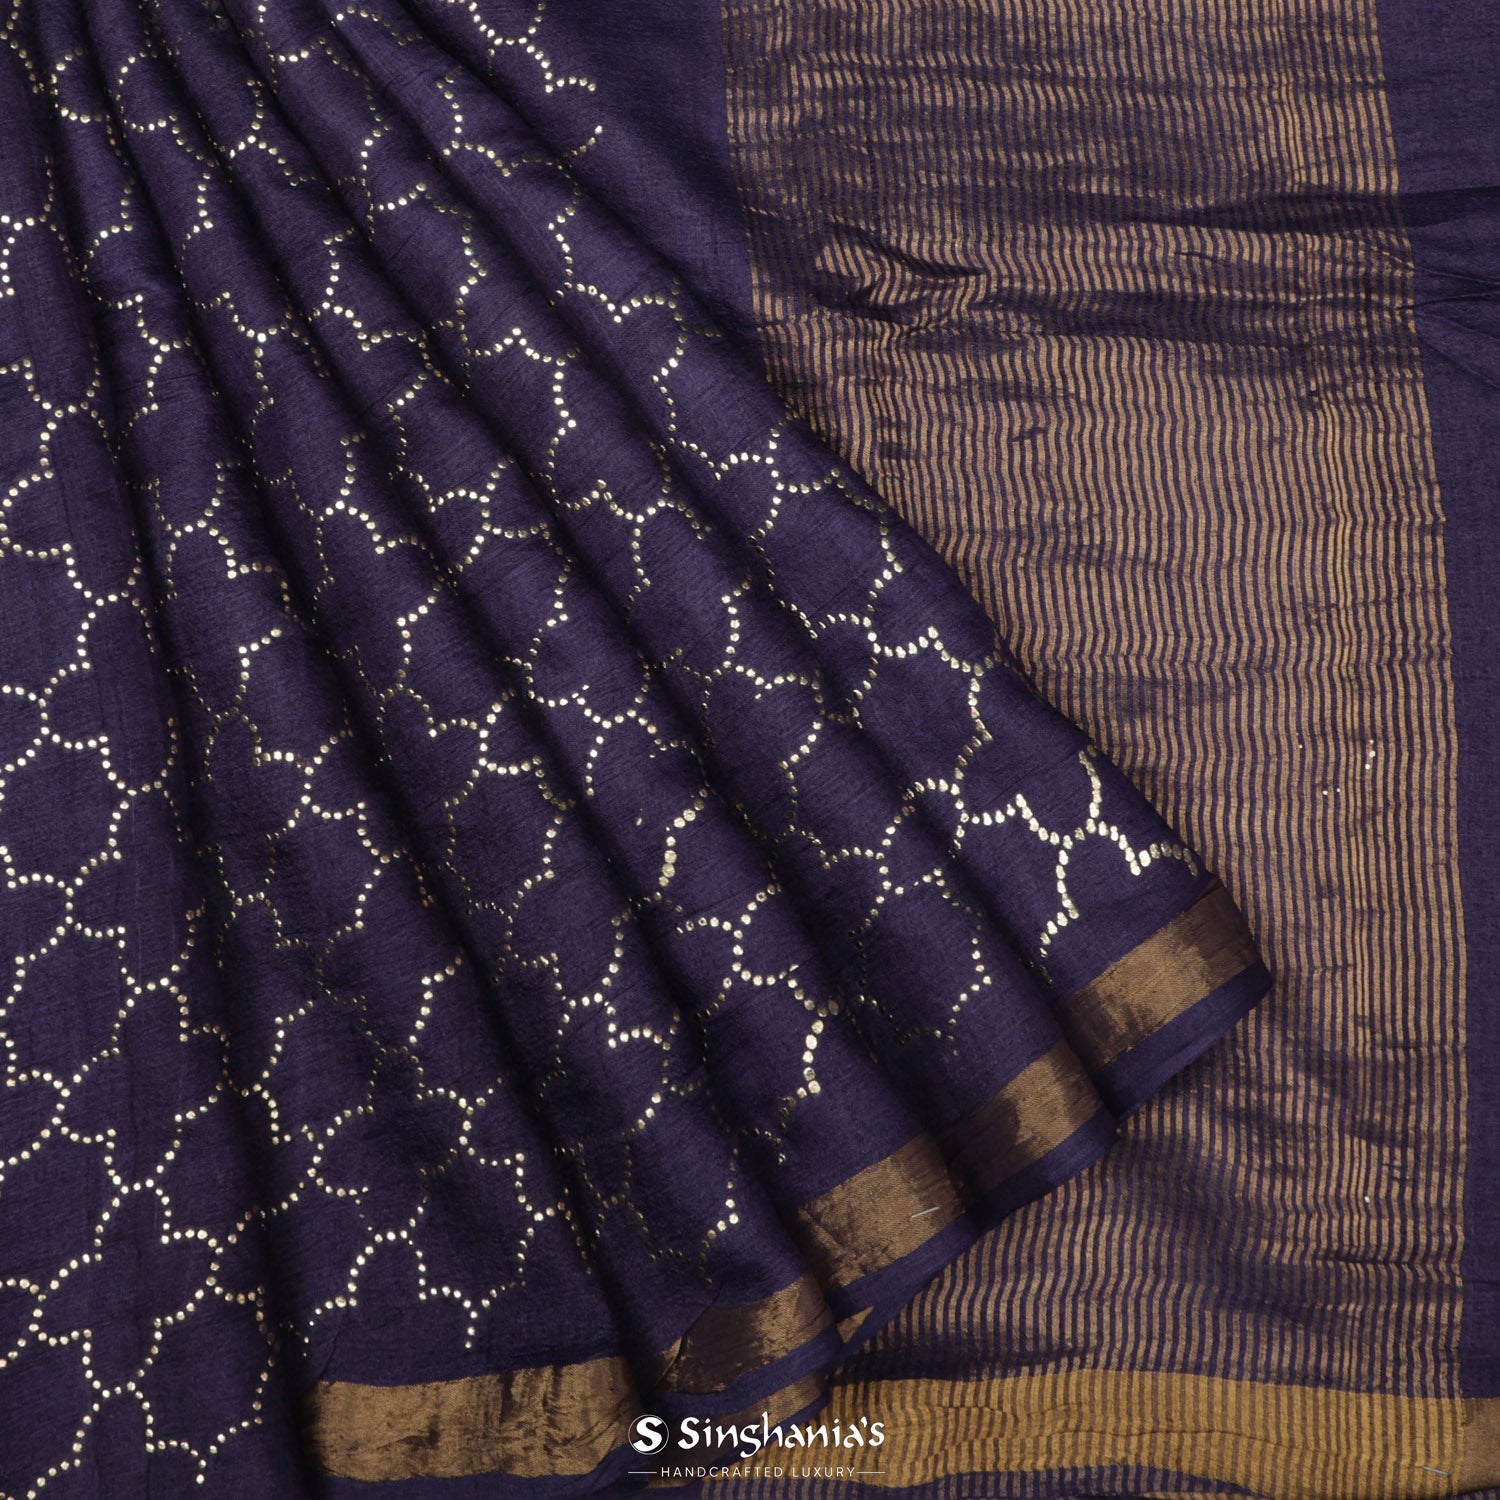 Matte Purple Tussar Silk Saree With Foil Print In Grid Pattern